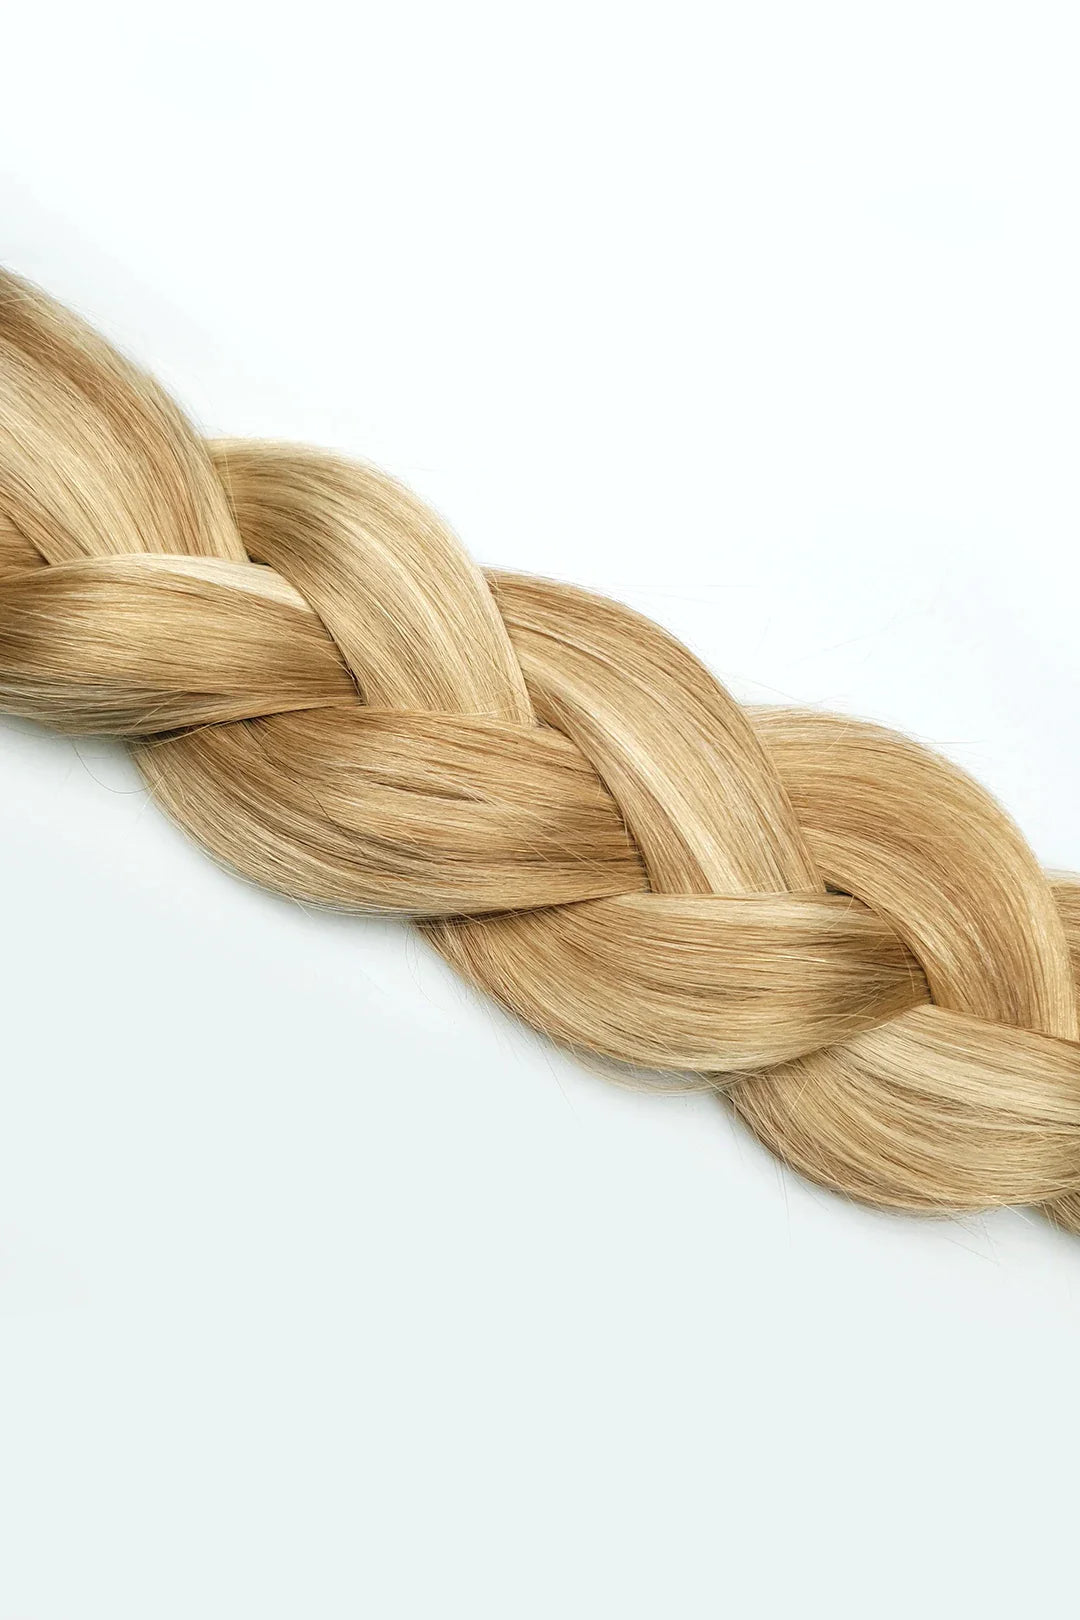 Licht blonde highlights clip-in hairextensions ☀️ 60cm - 280g